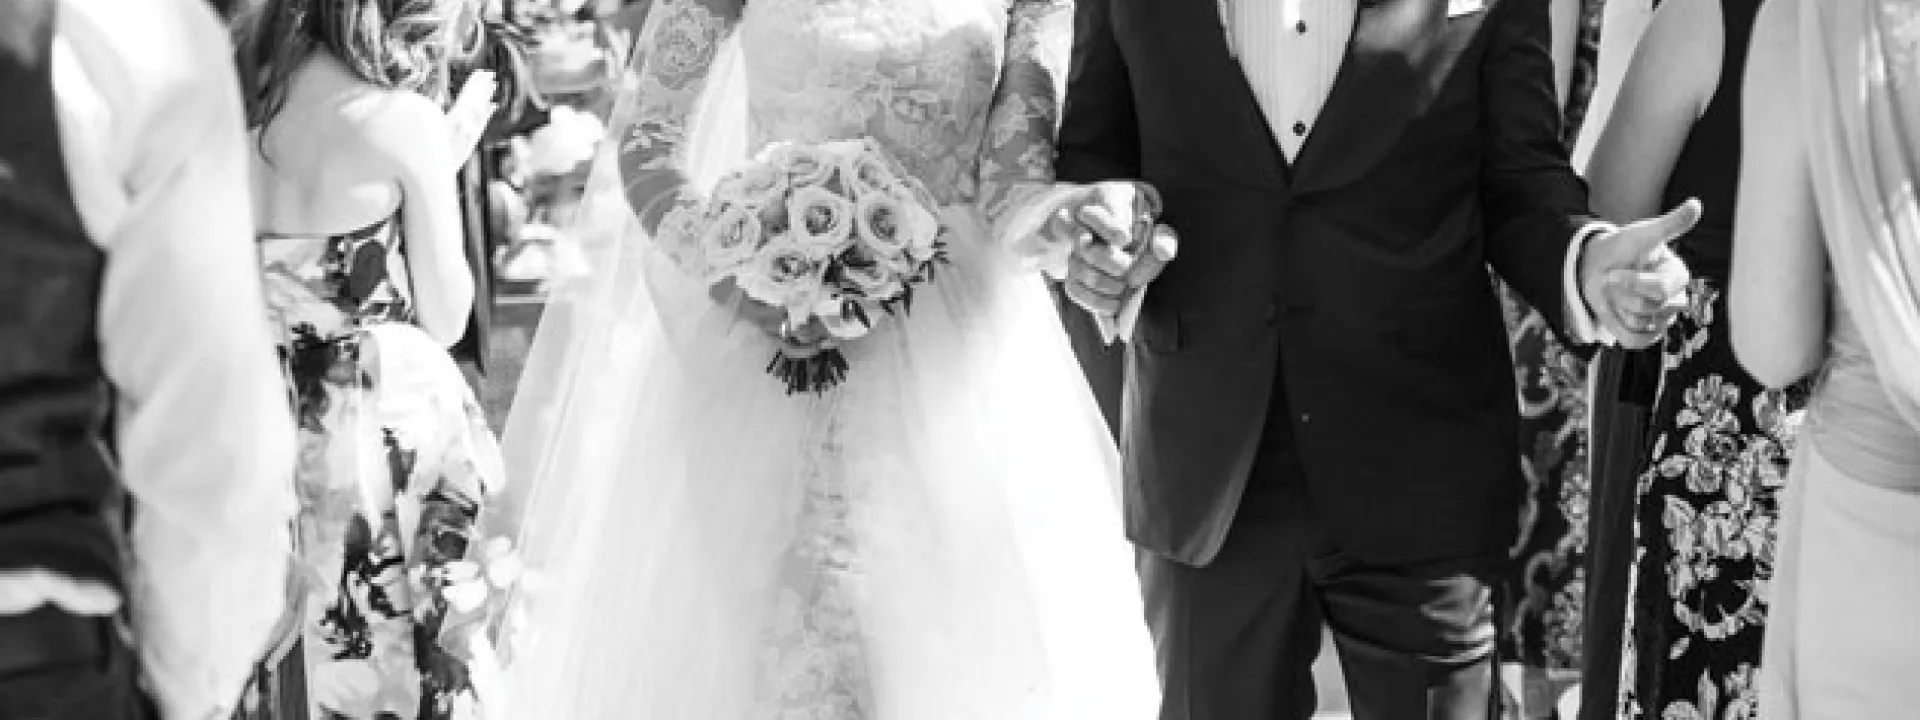 Sarah Keller and David Houck walk down the aisle at their wedding at Kestrel Park in Santa Ynez.